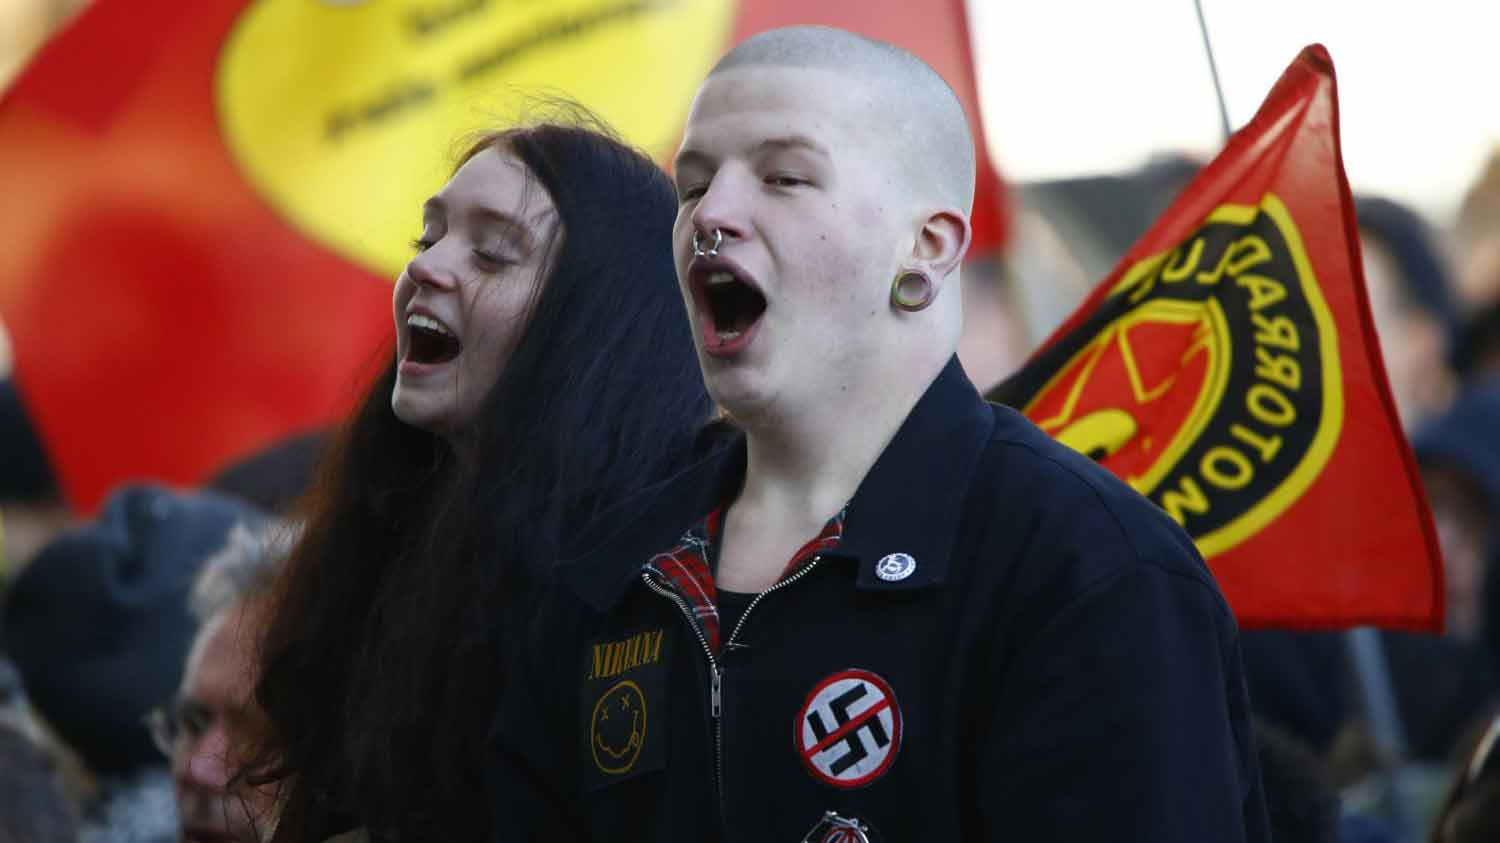 ¿Son fascistas los antifascistas?